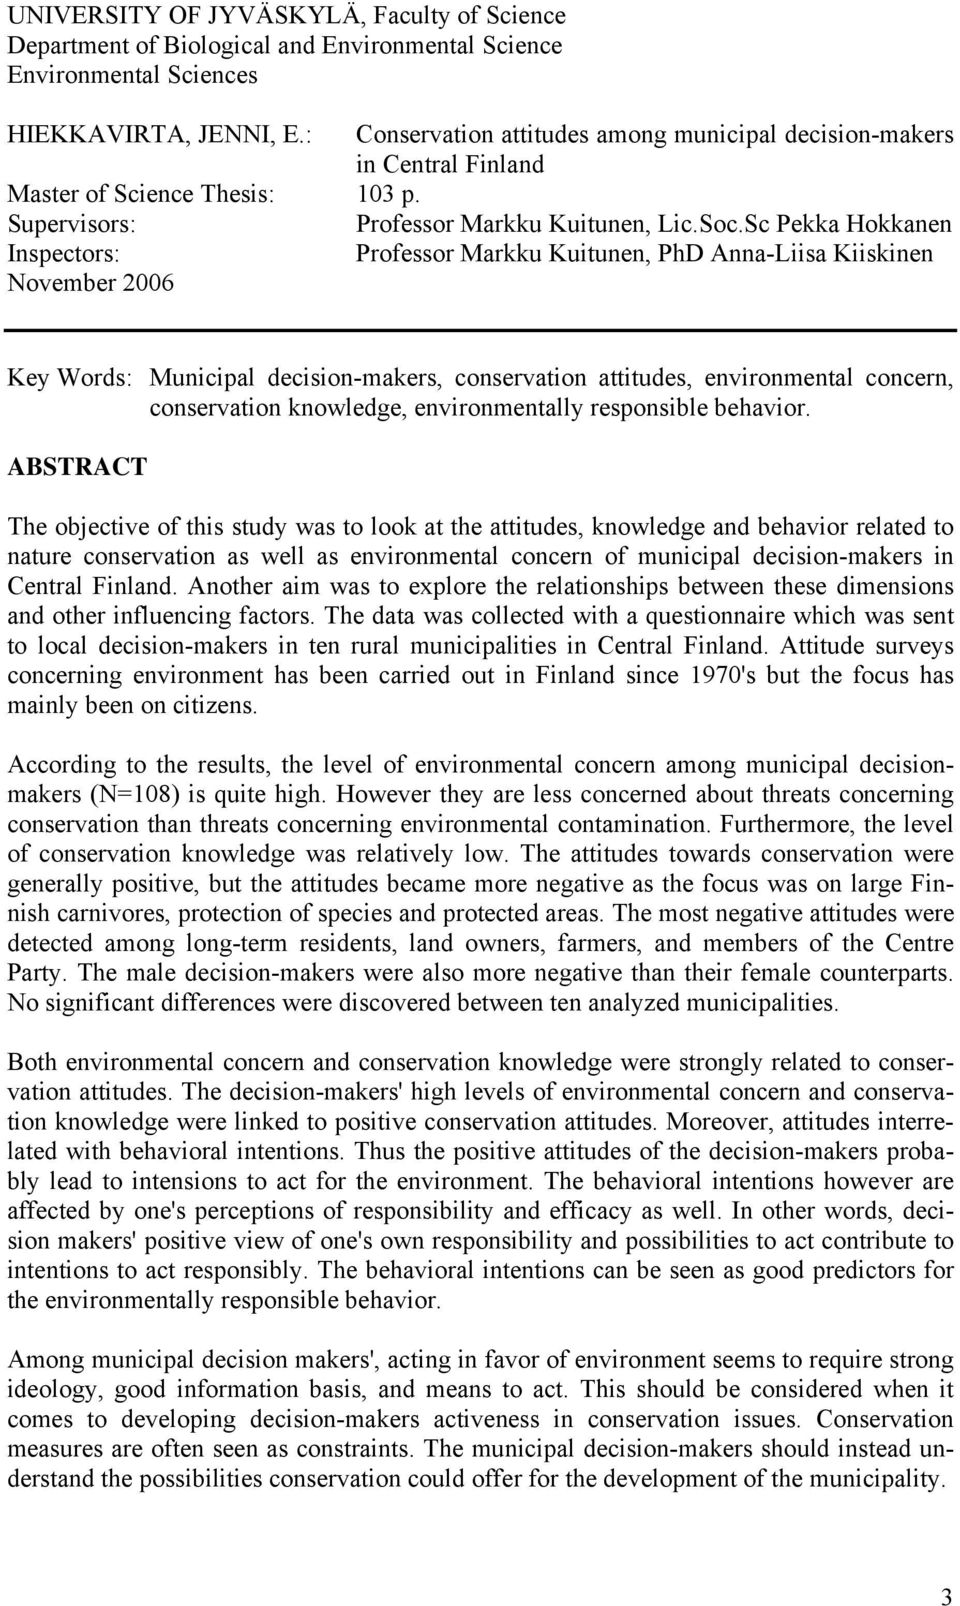 Sc Pekka Hokkanen Inspectors: Professor Markku Kuitunen, PhD Anna-Liisa Kiiskinen November 2006 Key Words: Municipal decision-makers, conservation attitudes, environmental concern, conservation